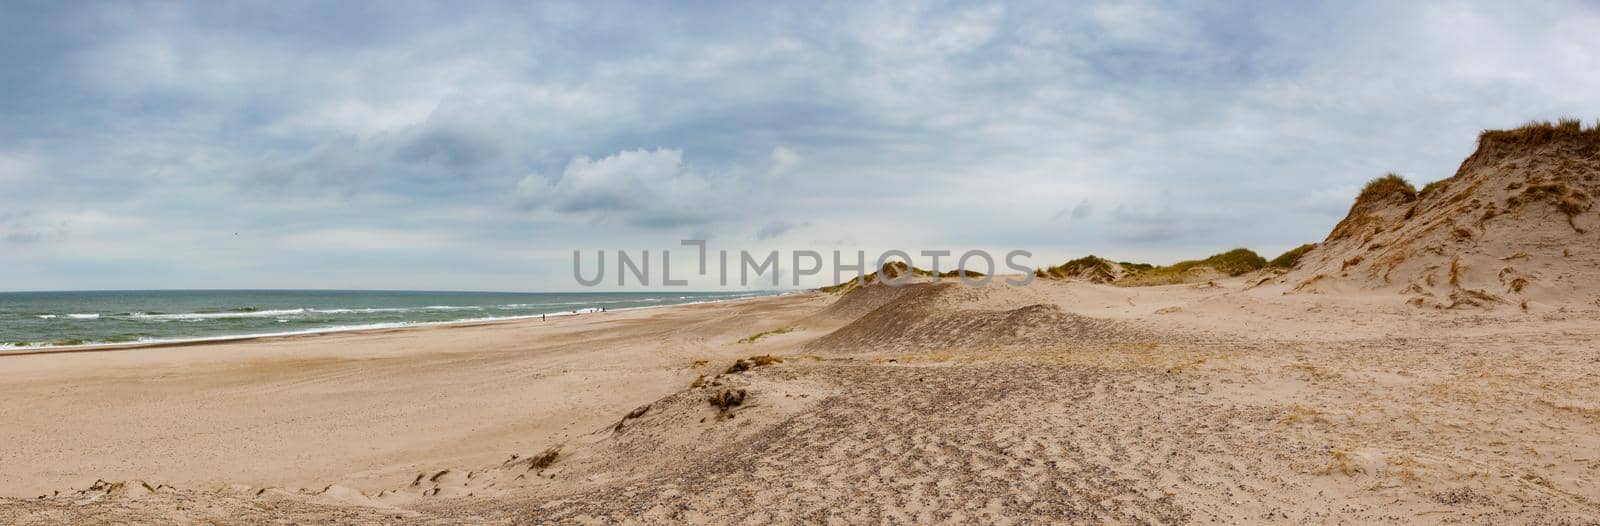 Hvide Sande is the epitome of beaches.West Jutland, Denmark. by CaptureLight